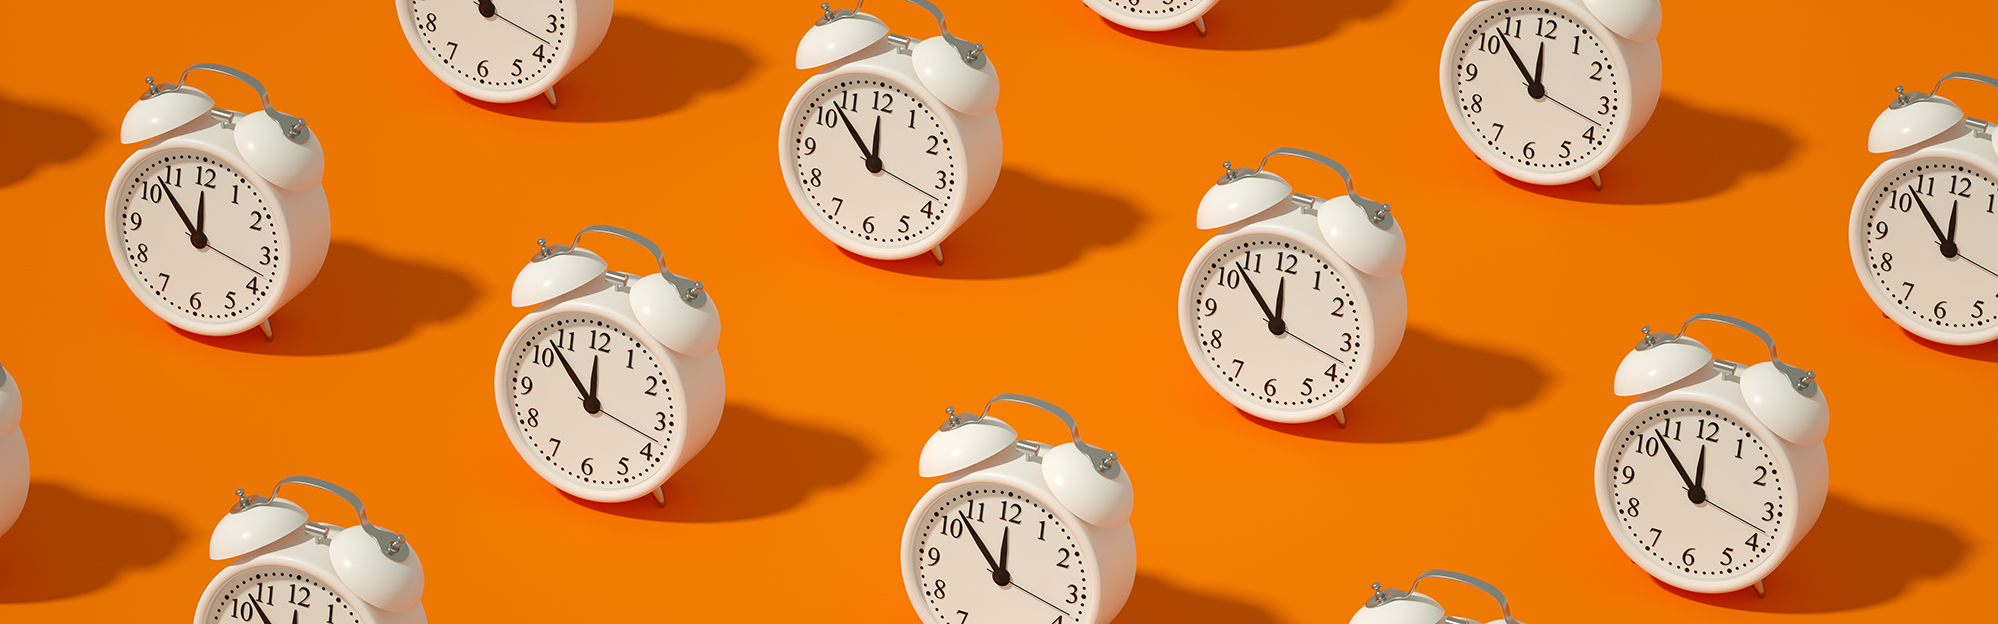 Illustration of multiple alarm clocks on a bright orange background.